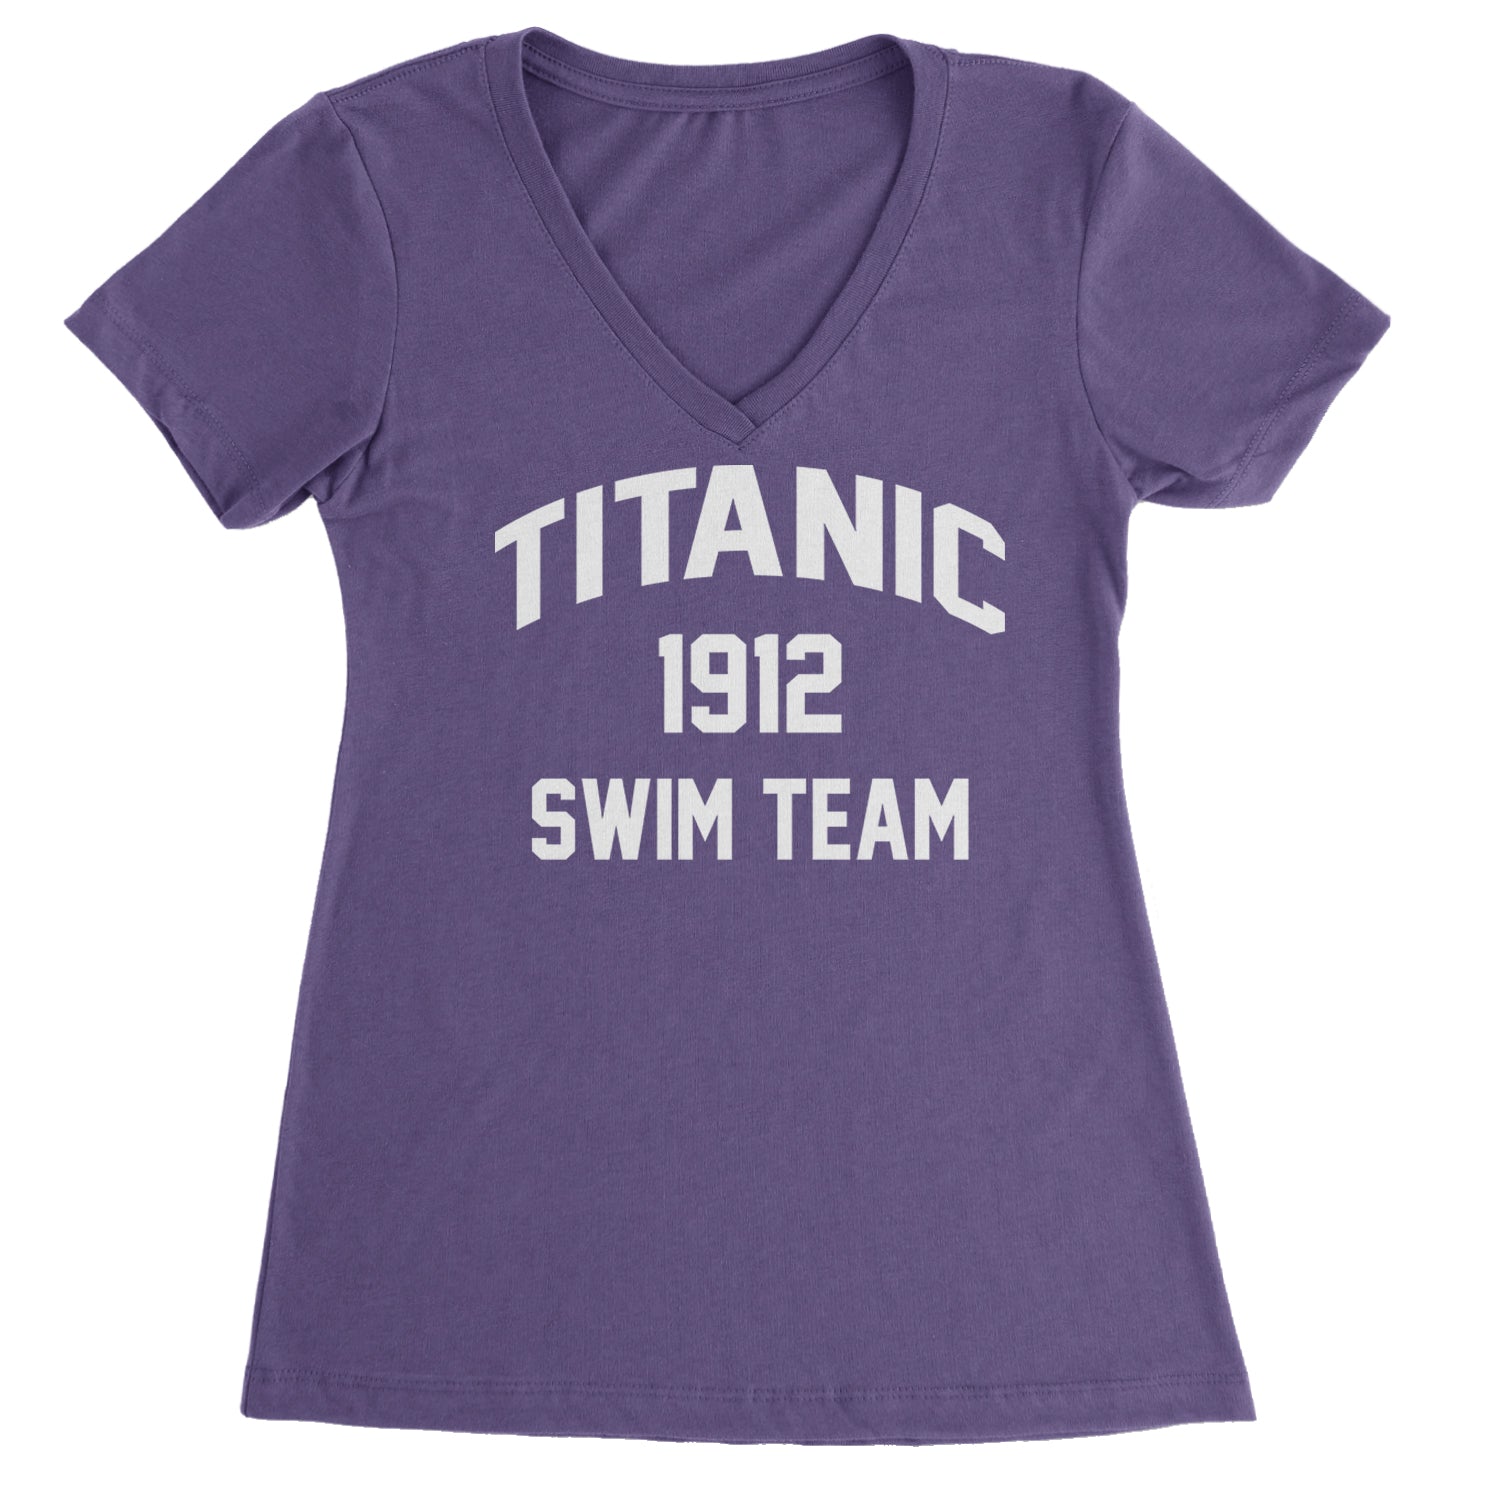 Titanic Swim Team 1912 Funny Cruise Ladies V-Neck T-shirt Purple